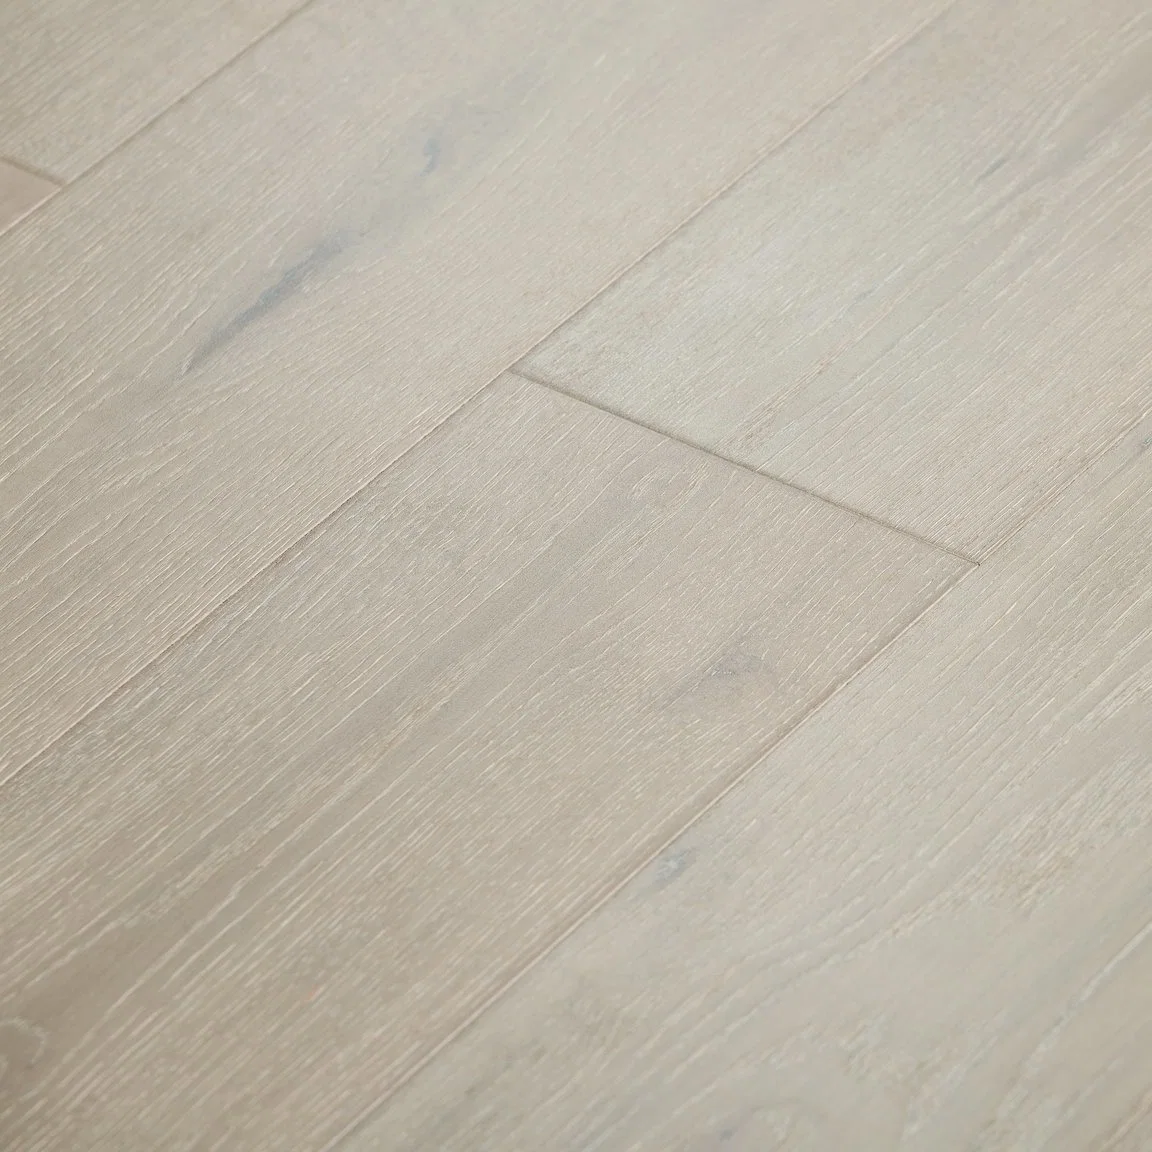 Ab Grade Building Materials Hardwood Composite Laminate Floor Multi-Layer Engineered Oak Solid Wood Marble Tile Parquet Flooring